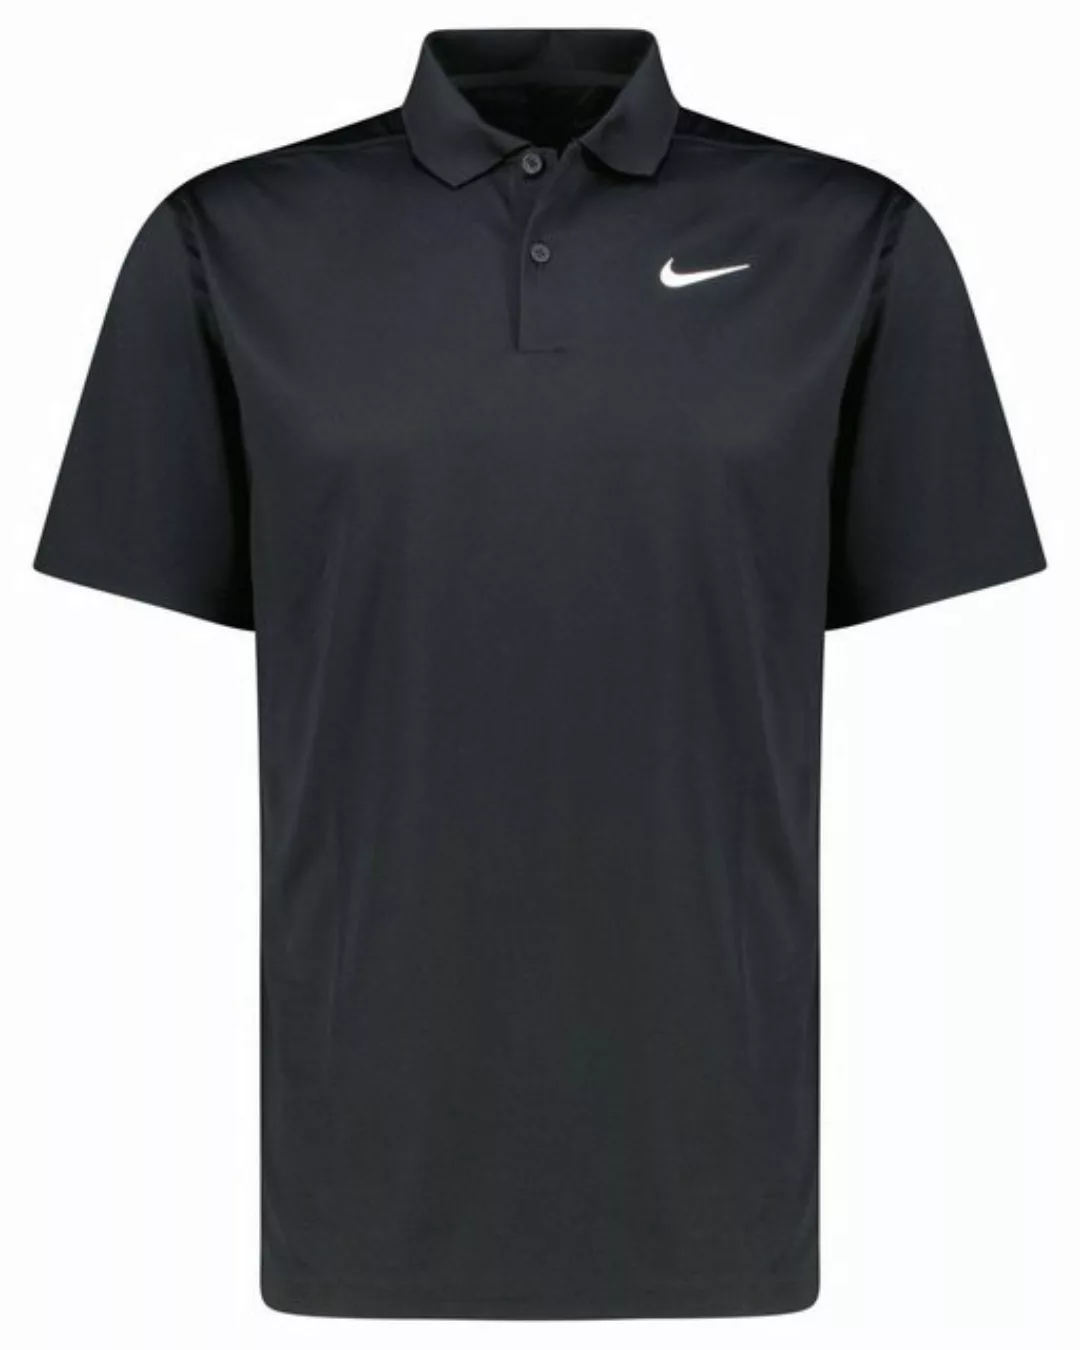 Nike Poloshirt Herren Tennis-Poloshirt (1-tlg) günstig online kaufen